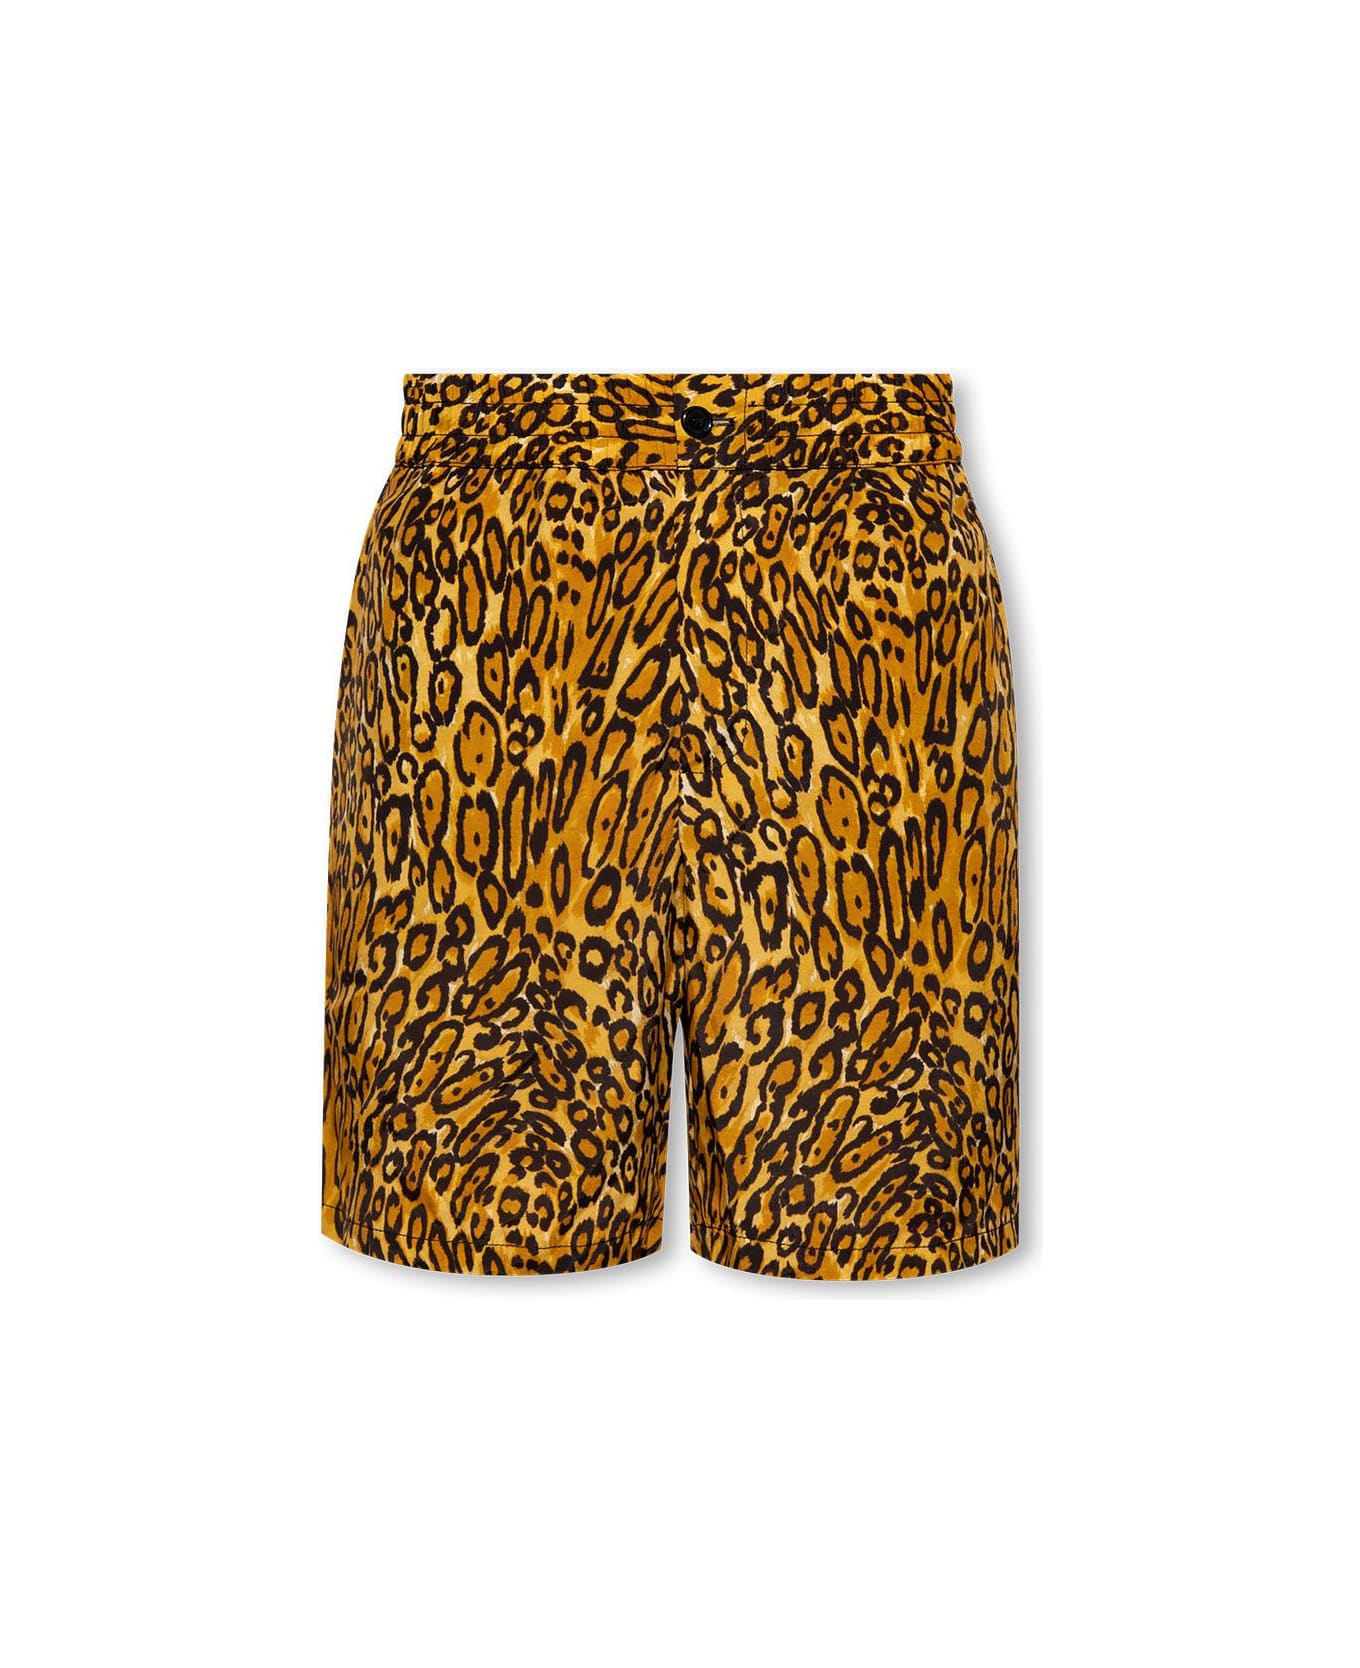 Moschino Shorts With Animal Print - NEUTRALS/BLACK